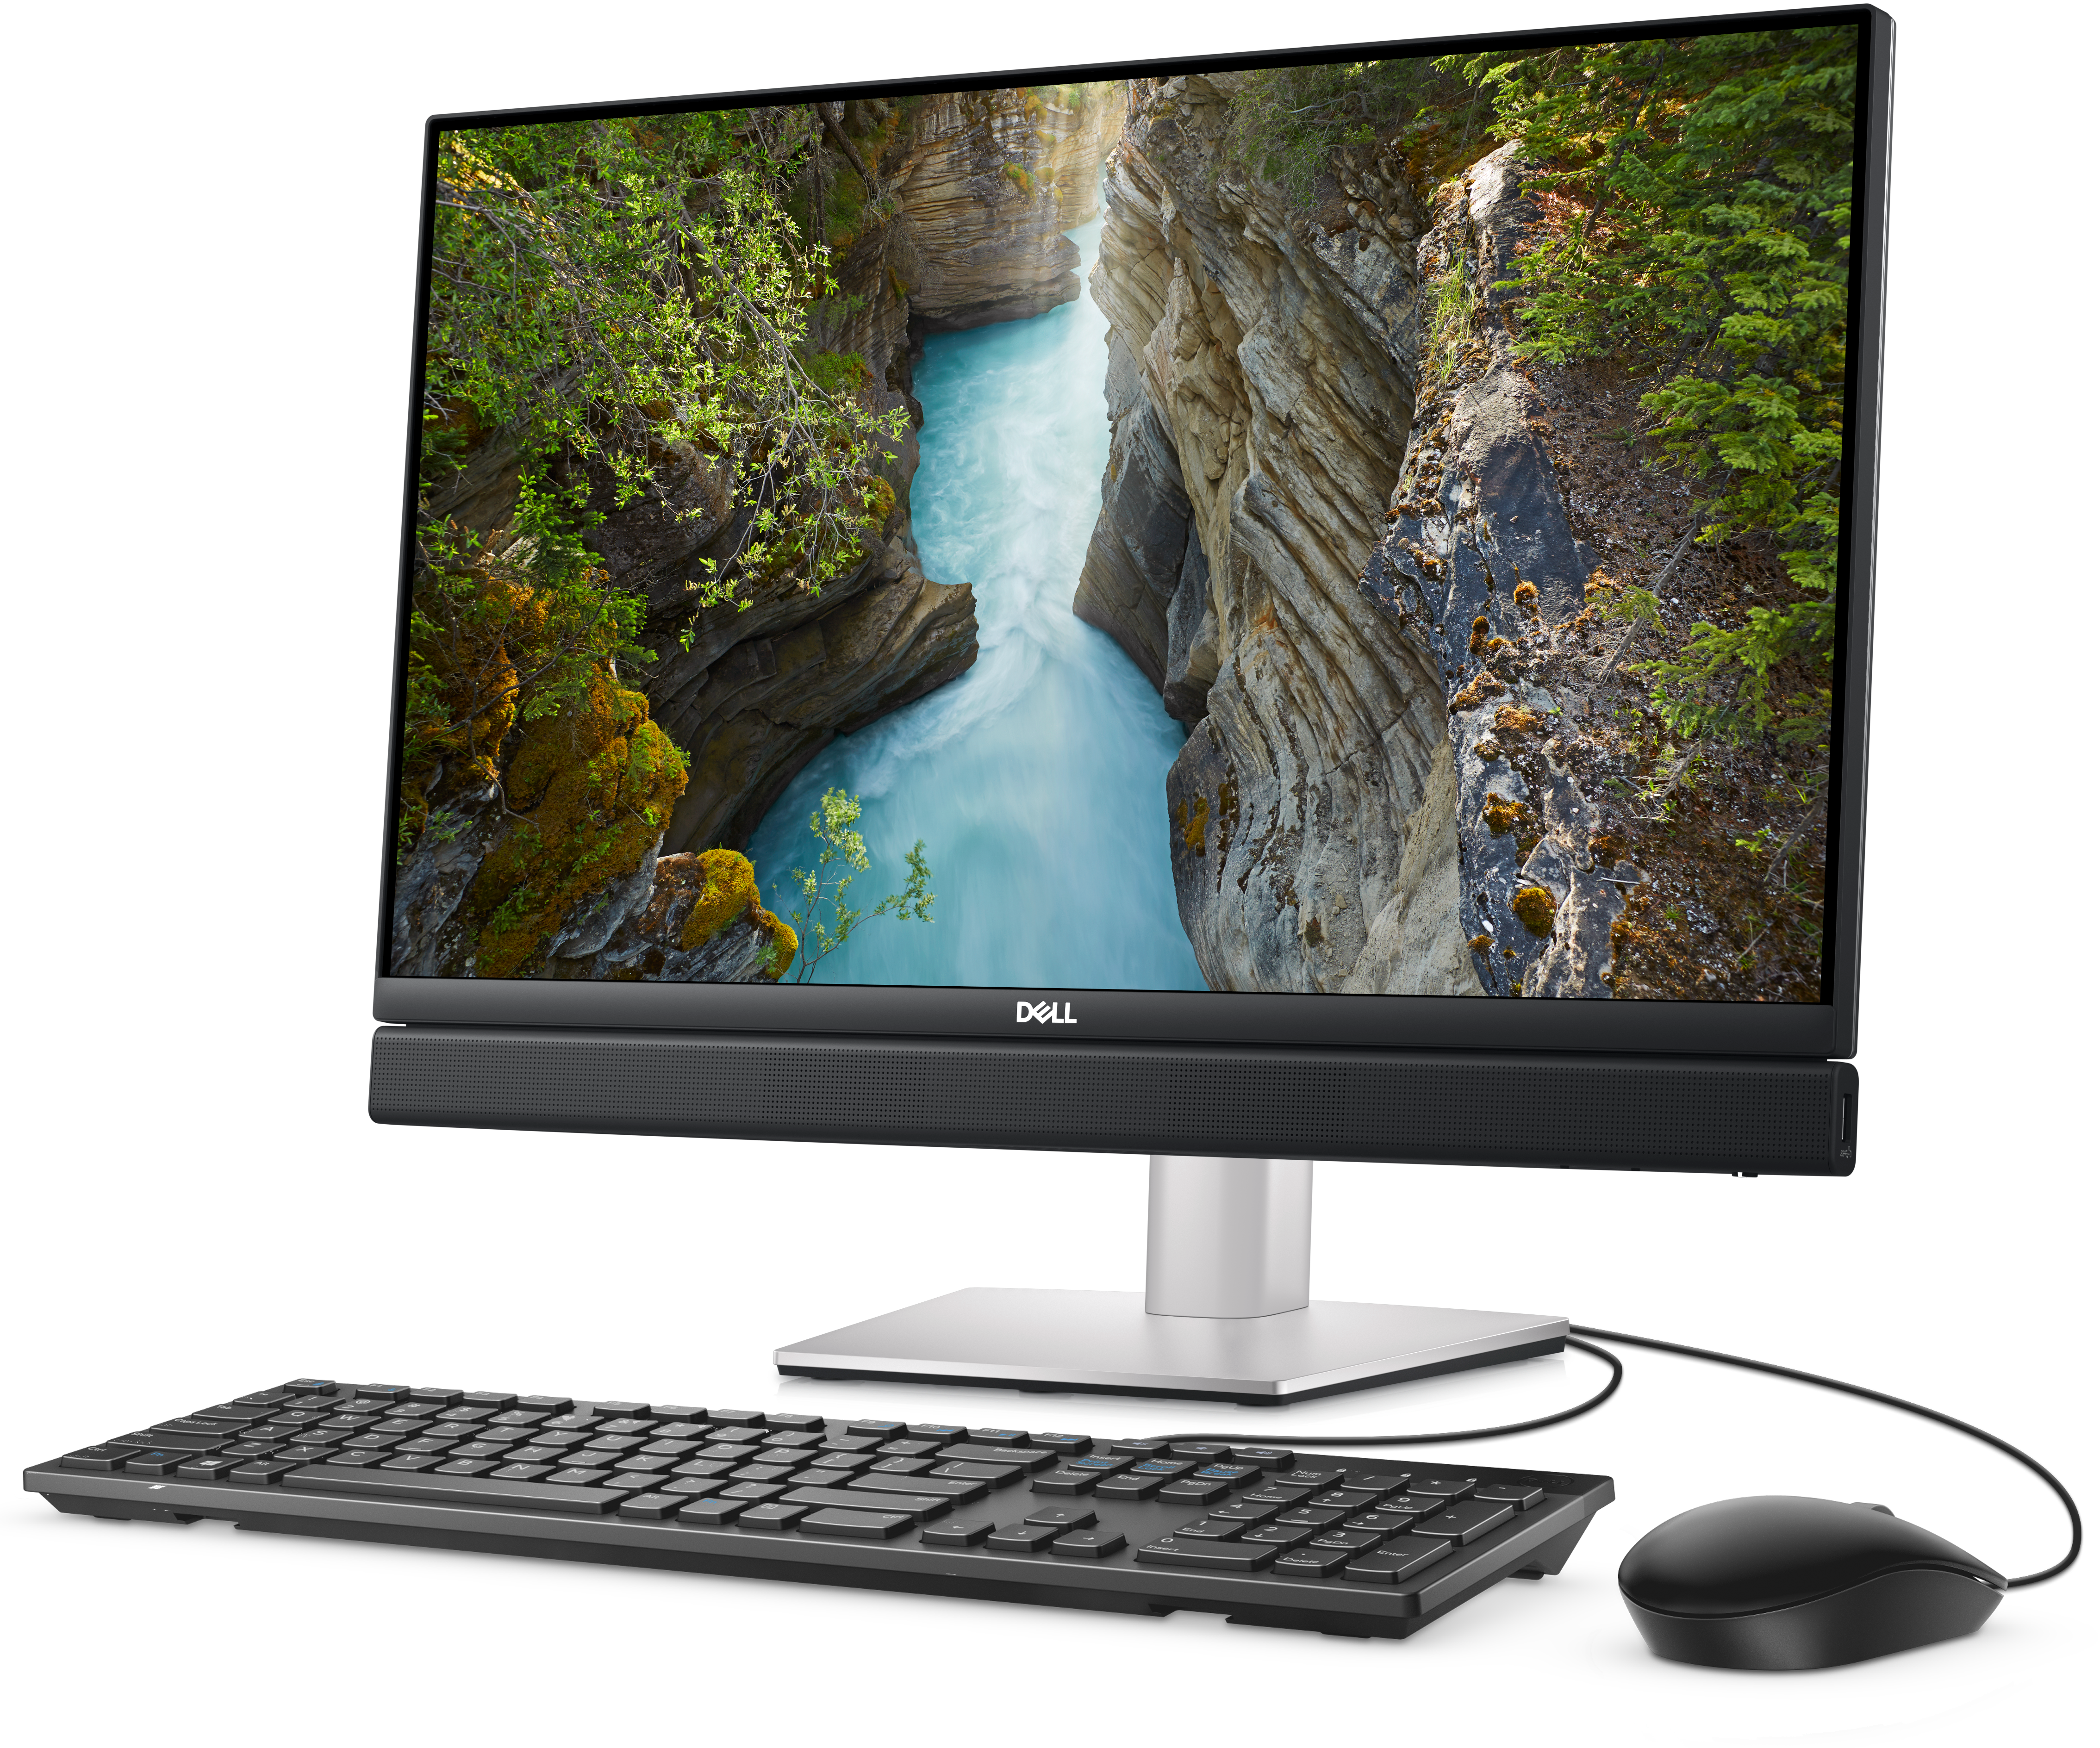 Optiplex 7000 Series All-in-One Desktop